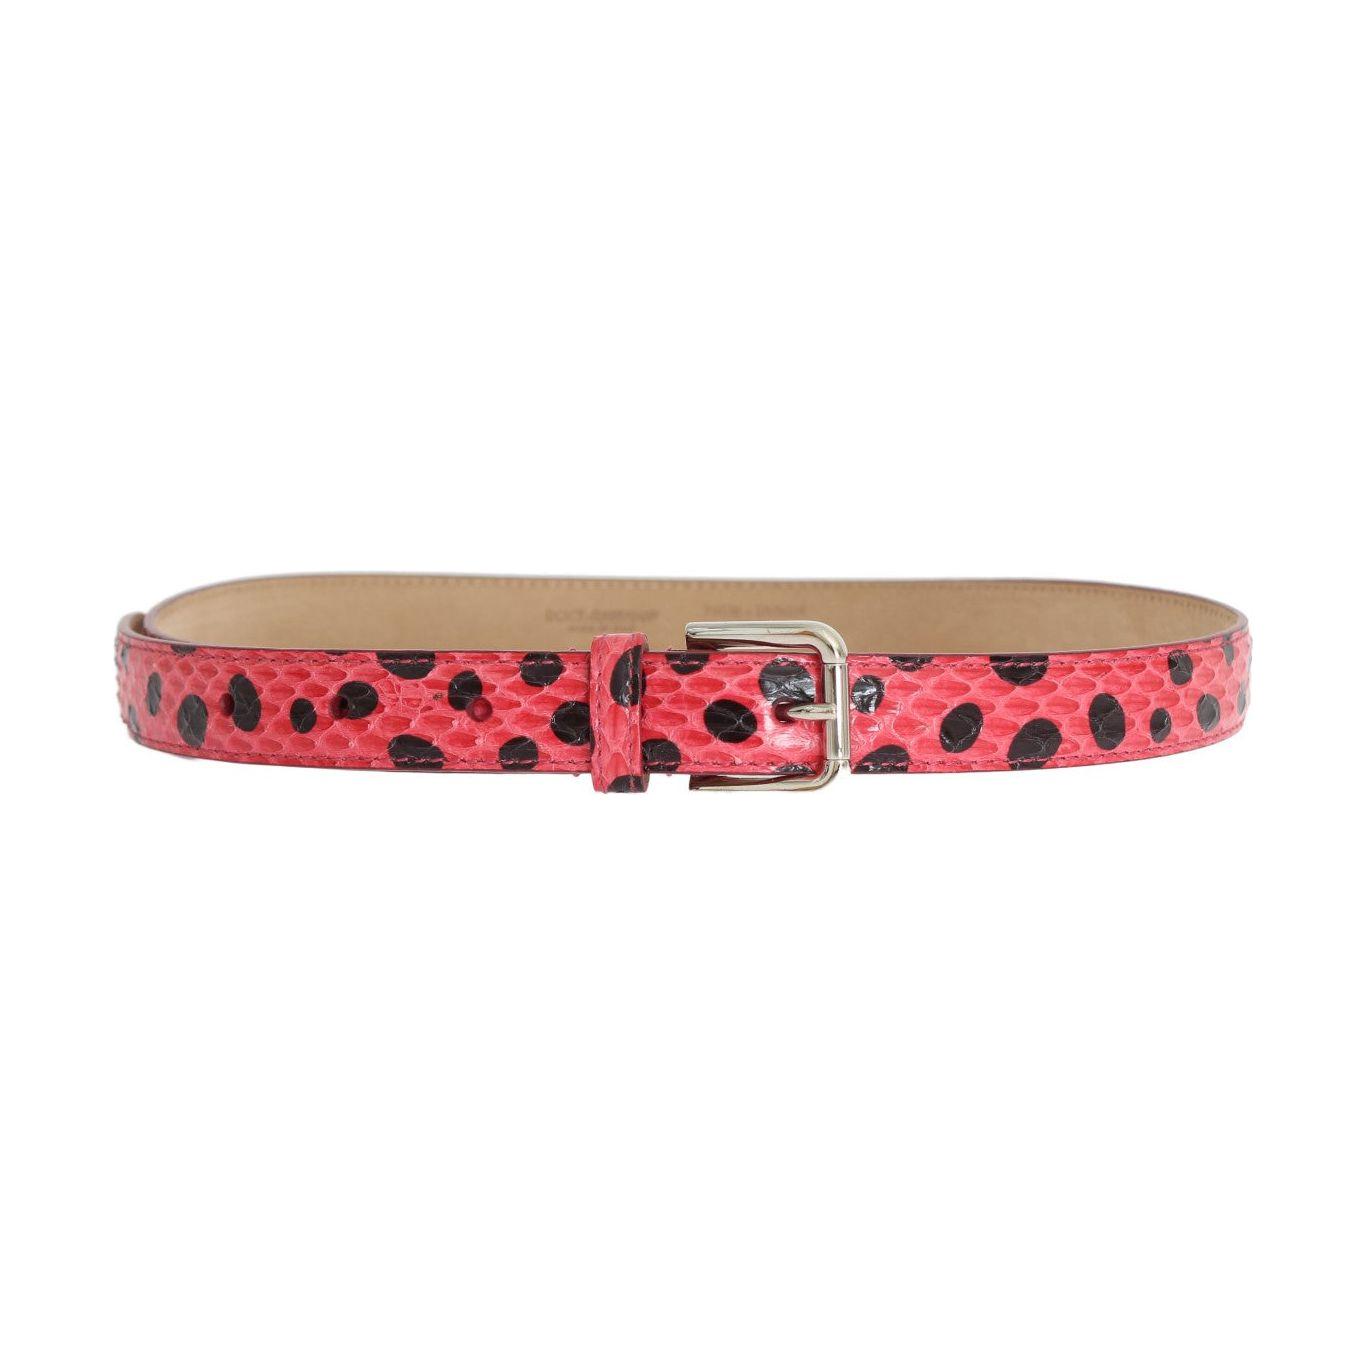 Dolce & Gabbana Polka Dot Snakeskin Belt with Silver Buckle Belt pink-polka-snakeskin-silver-buckle-belt 472628-pink-polka-snakeskin-silver-buckle-belt-2.jpg